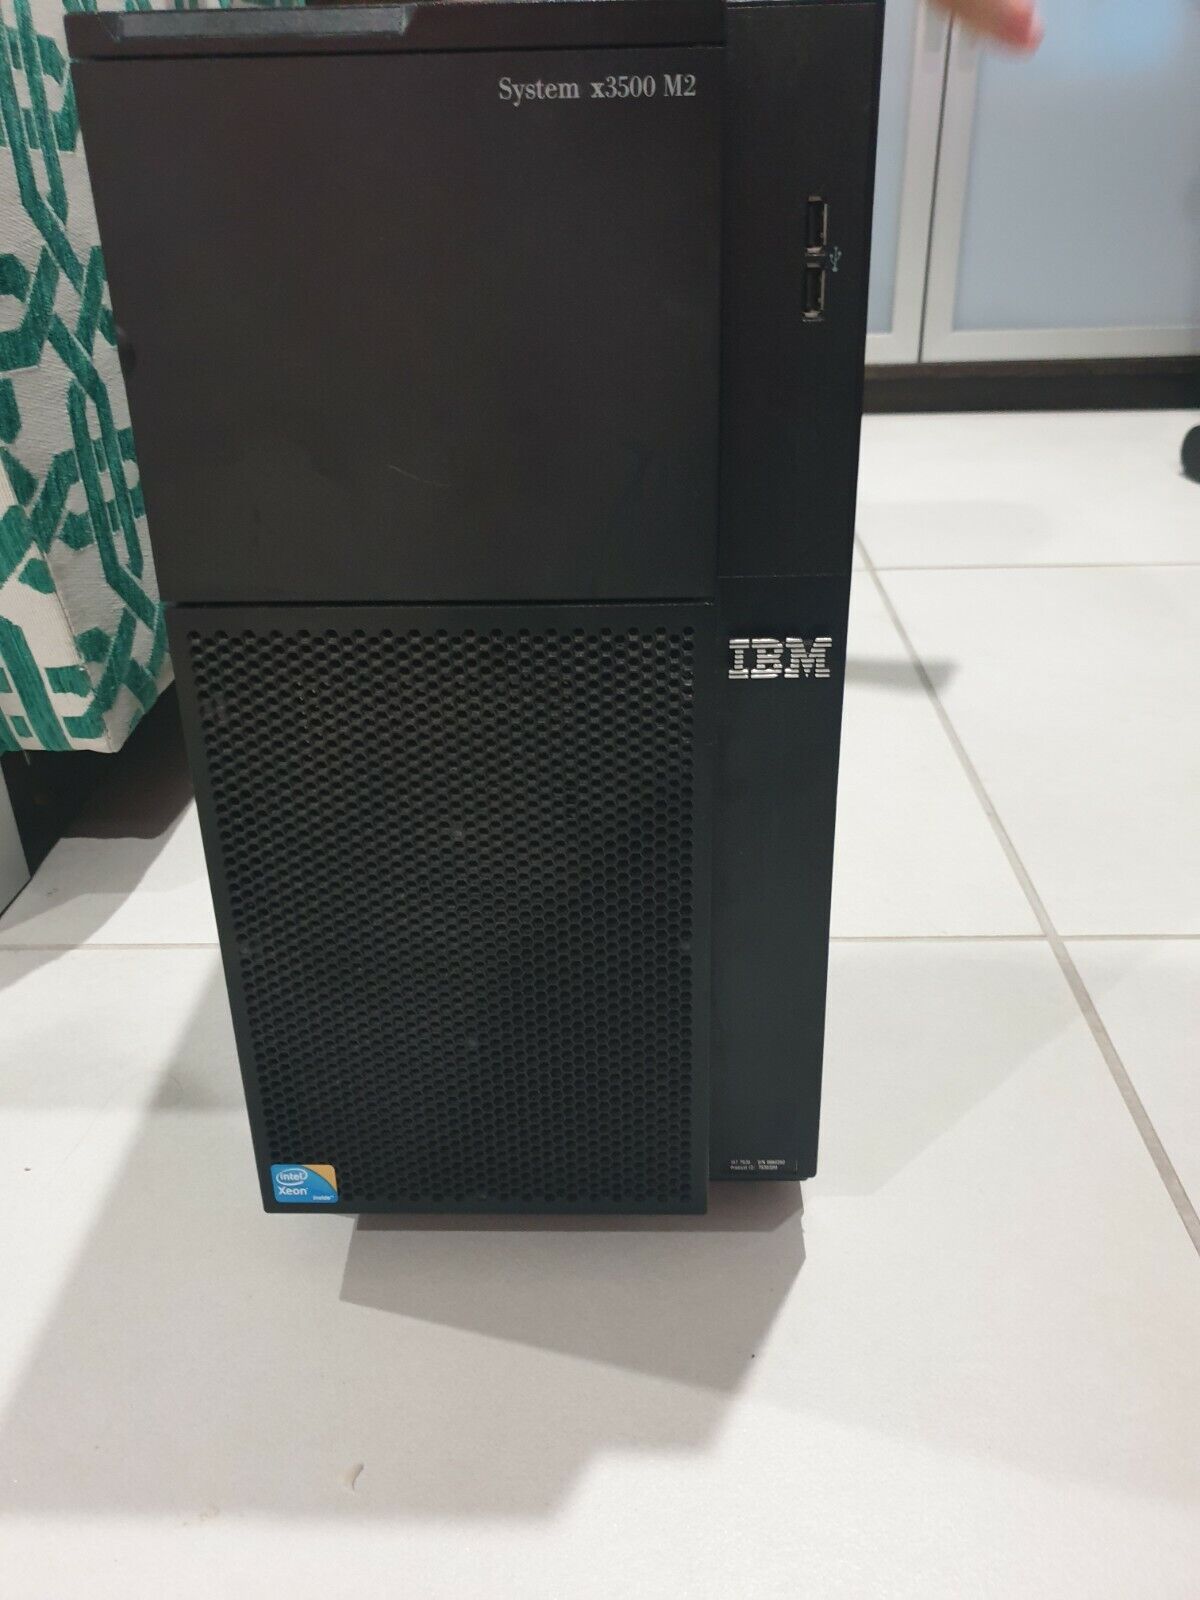 IBM Server x3500 M2 Xeon CPU, 18GB Ram, 320GB & 2TB Hdd - Tested an Working